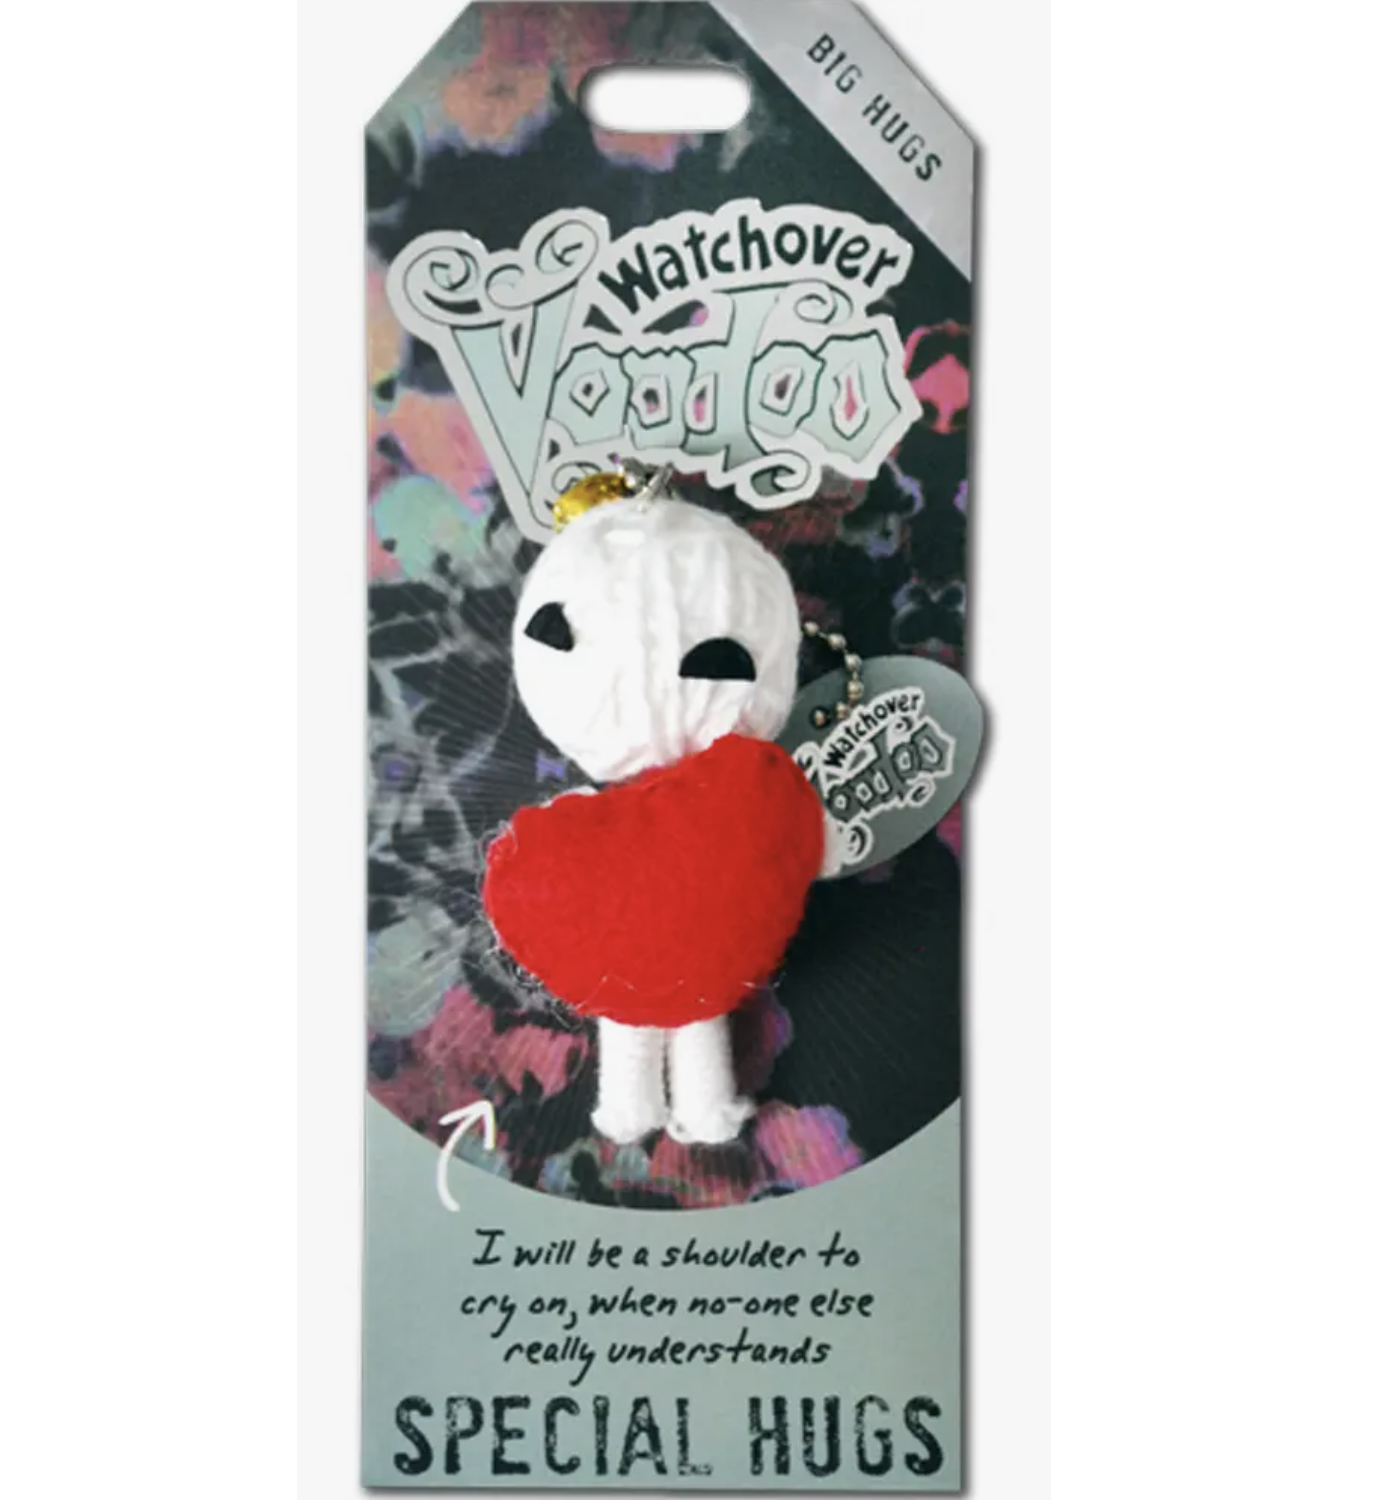 Special Hugs Voodoo Doll